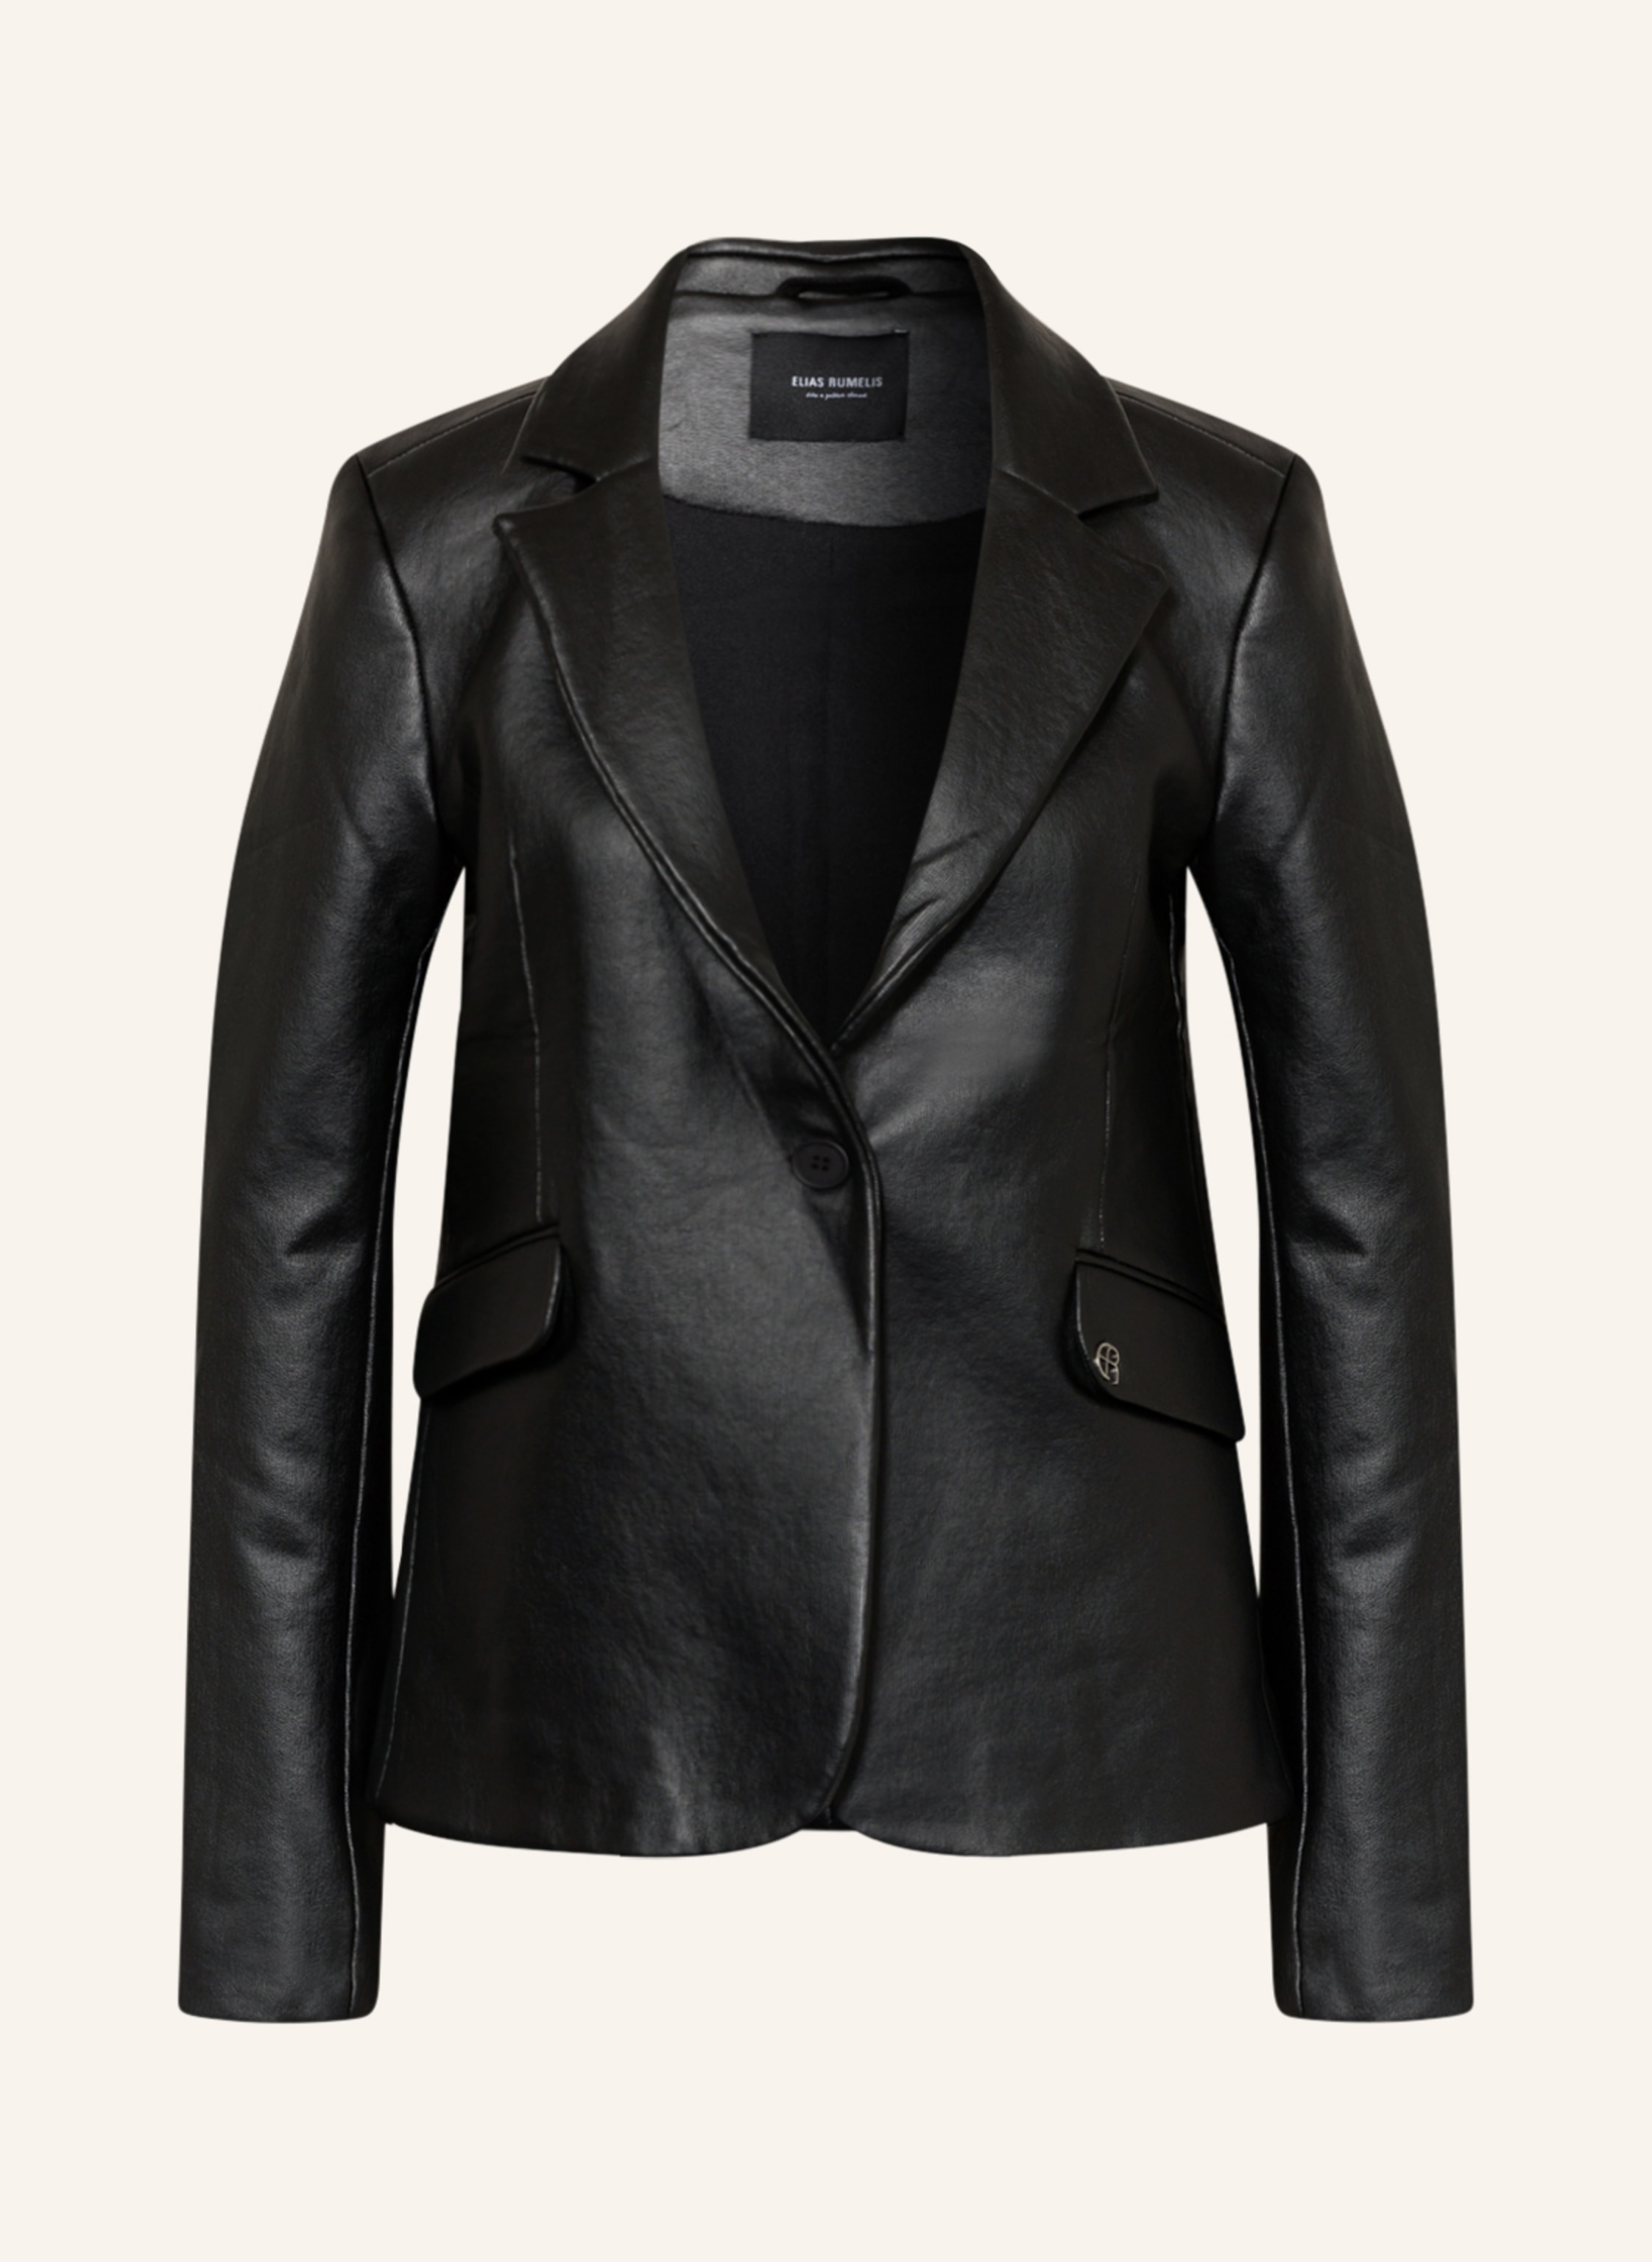 ER ELIAS RUMELIS Blazer ERLAURA in leather look in black | Breuninger